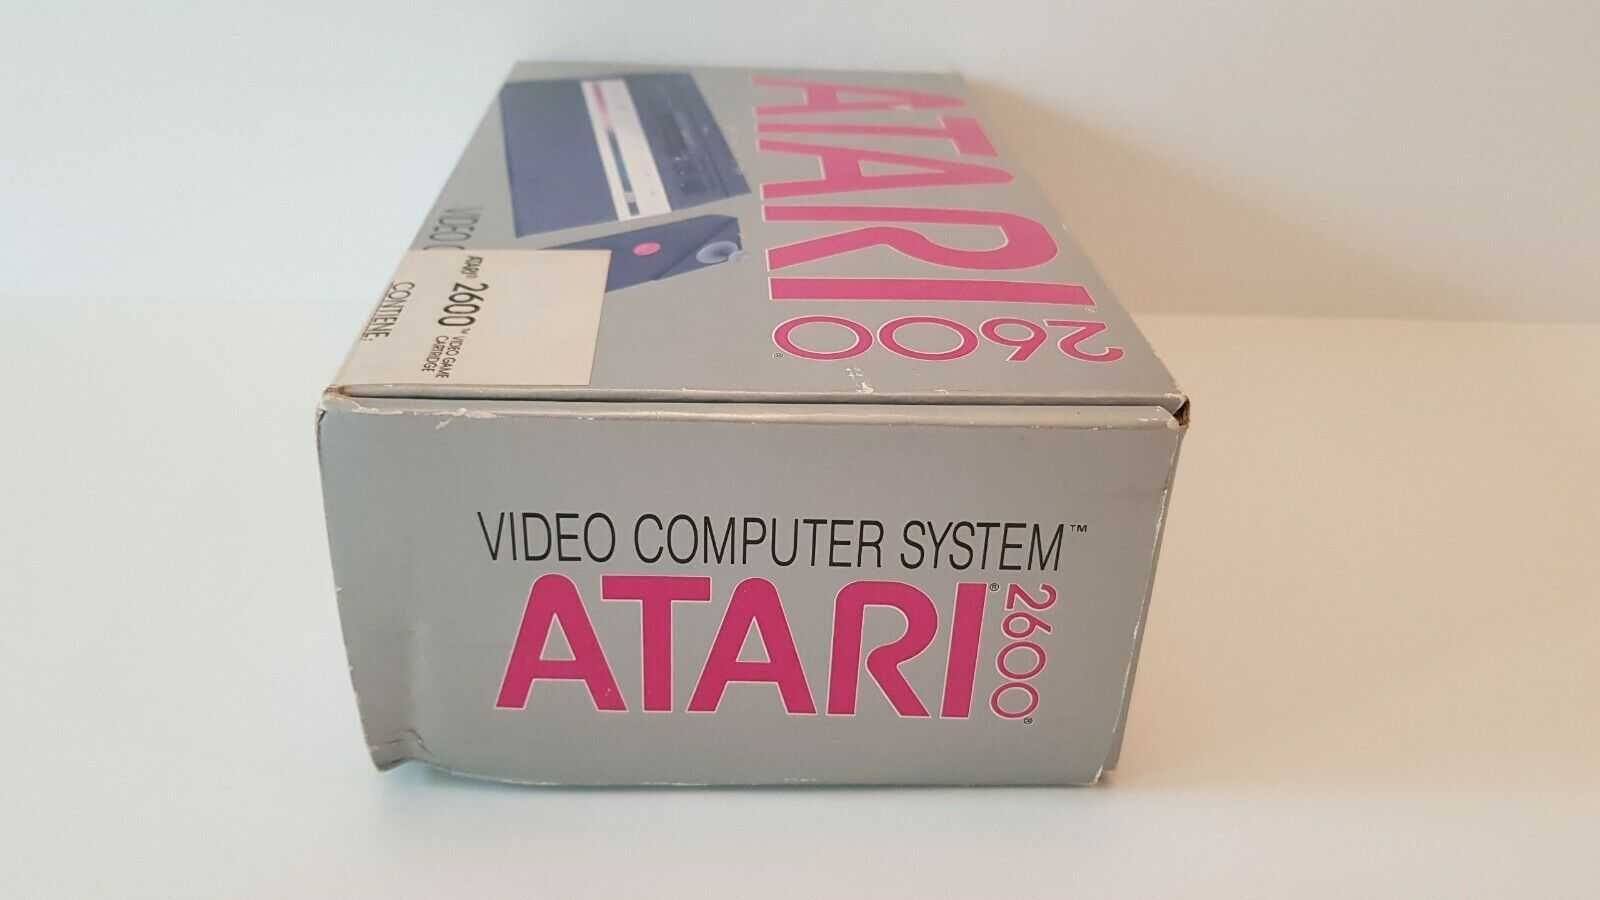 Consola Nova Atari 2600 Completa na Caixa com 34 Jogos